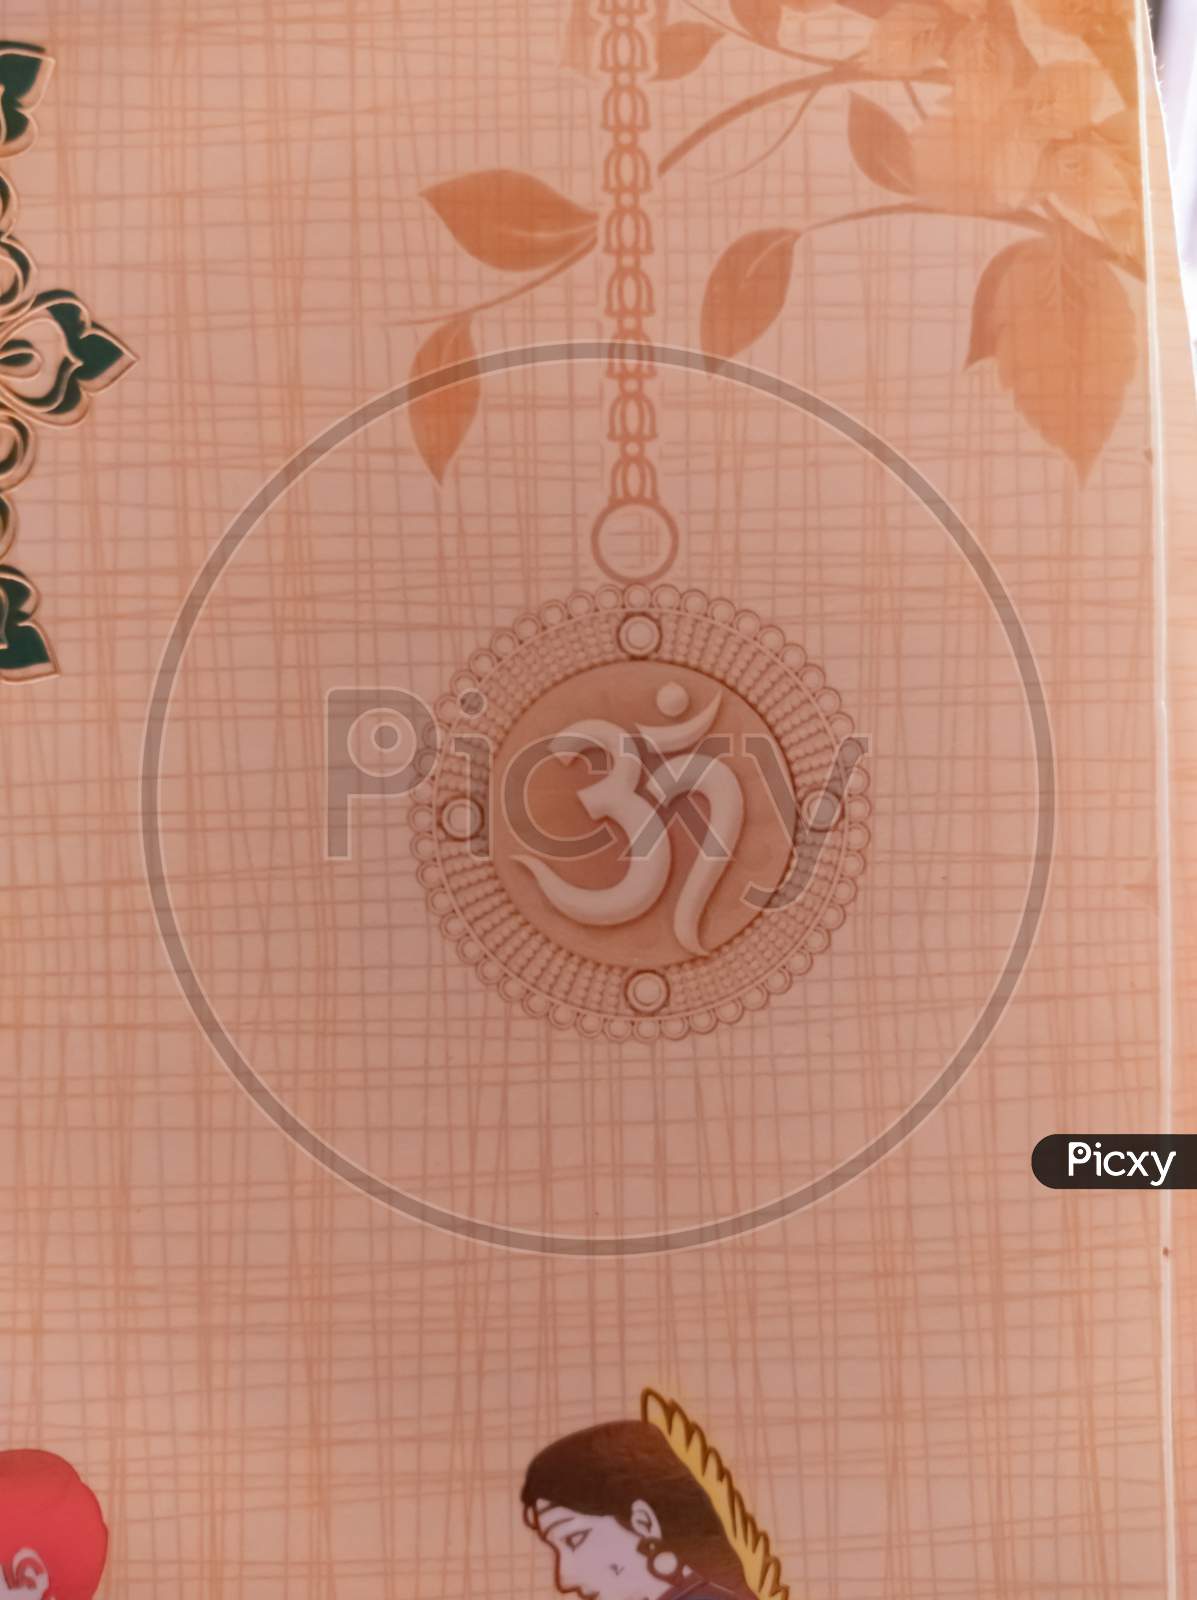 Indian traditional ohm symbol on wedding invitation card.